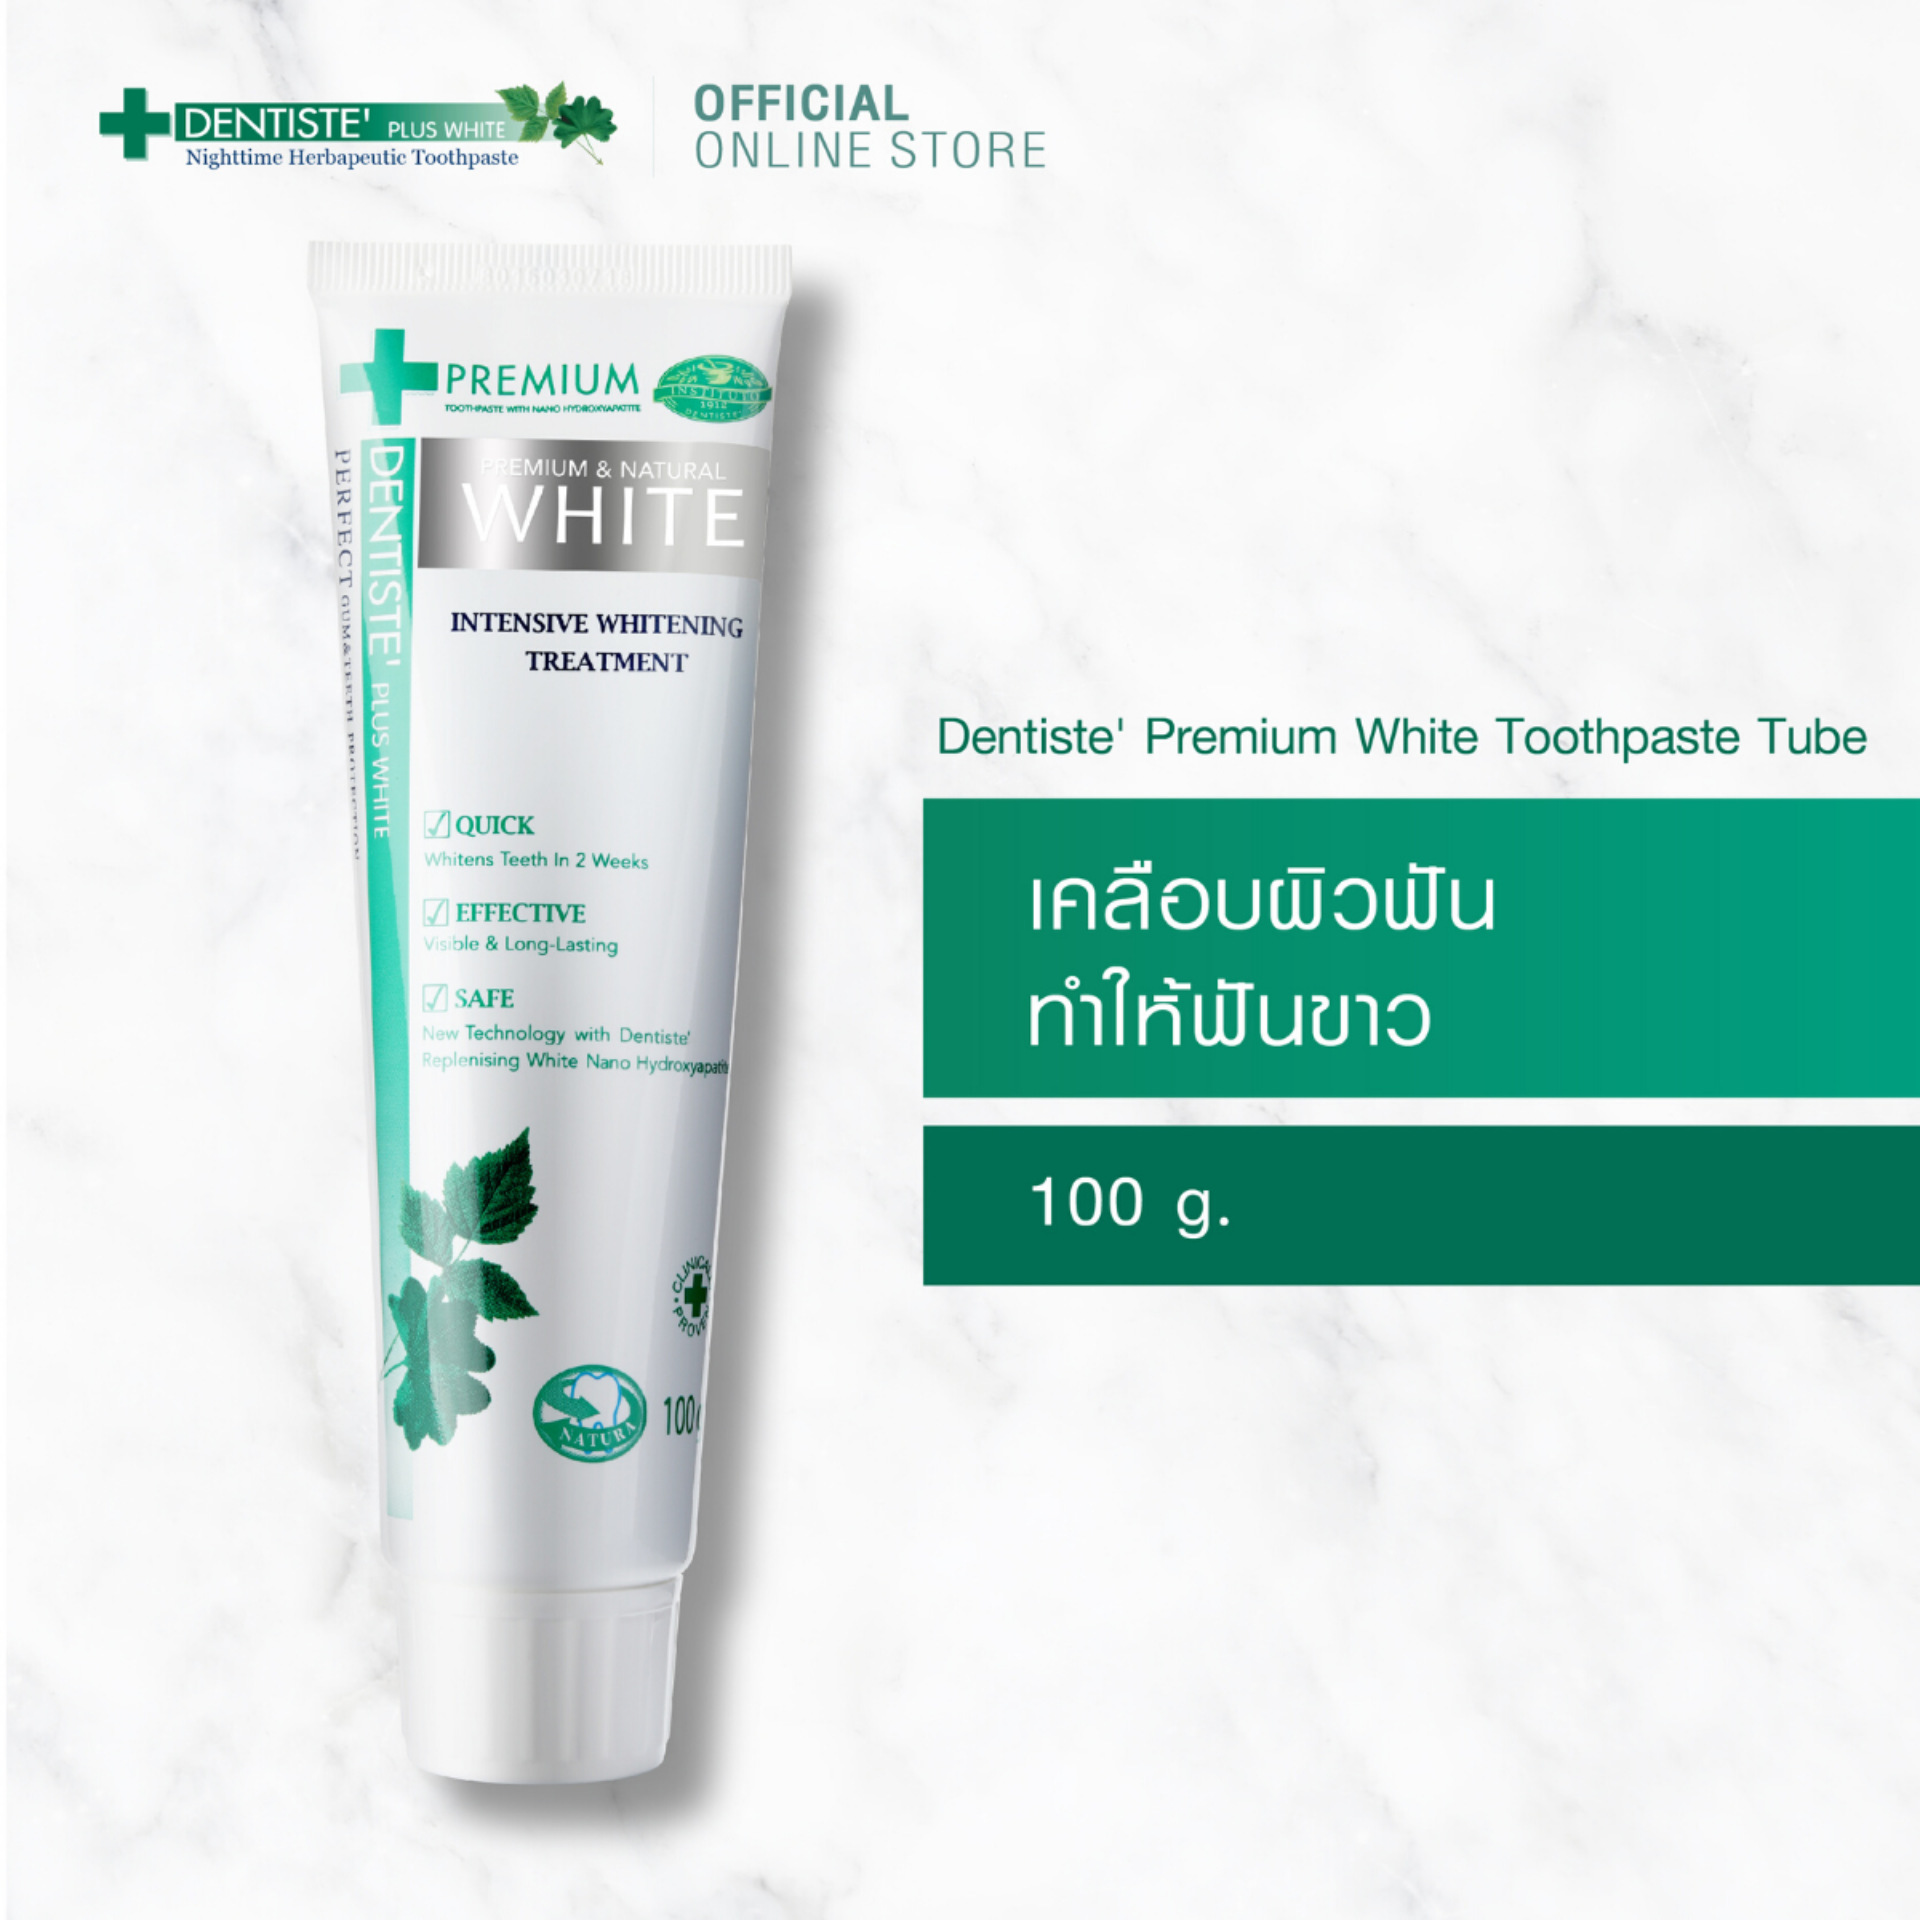 Dentiste Premium White Toothpaste Tube - เดนทิสเต้ ยาสีฟัน สูตรฟันขาว แบบหลอดบีบ ขนาด 50 กรัม / 100 กรัม. 